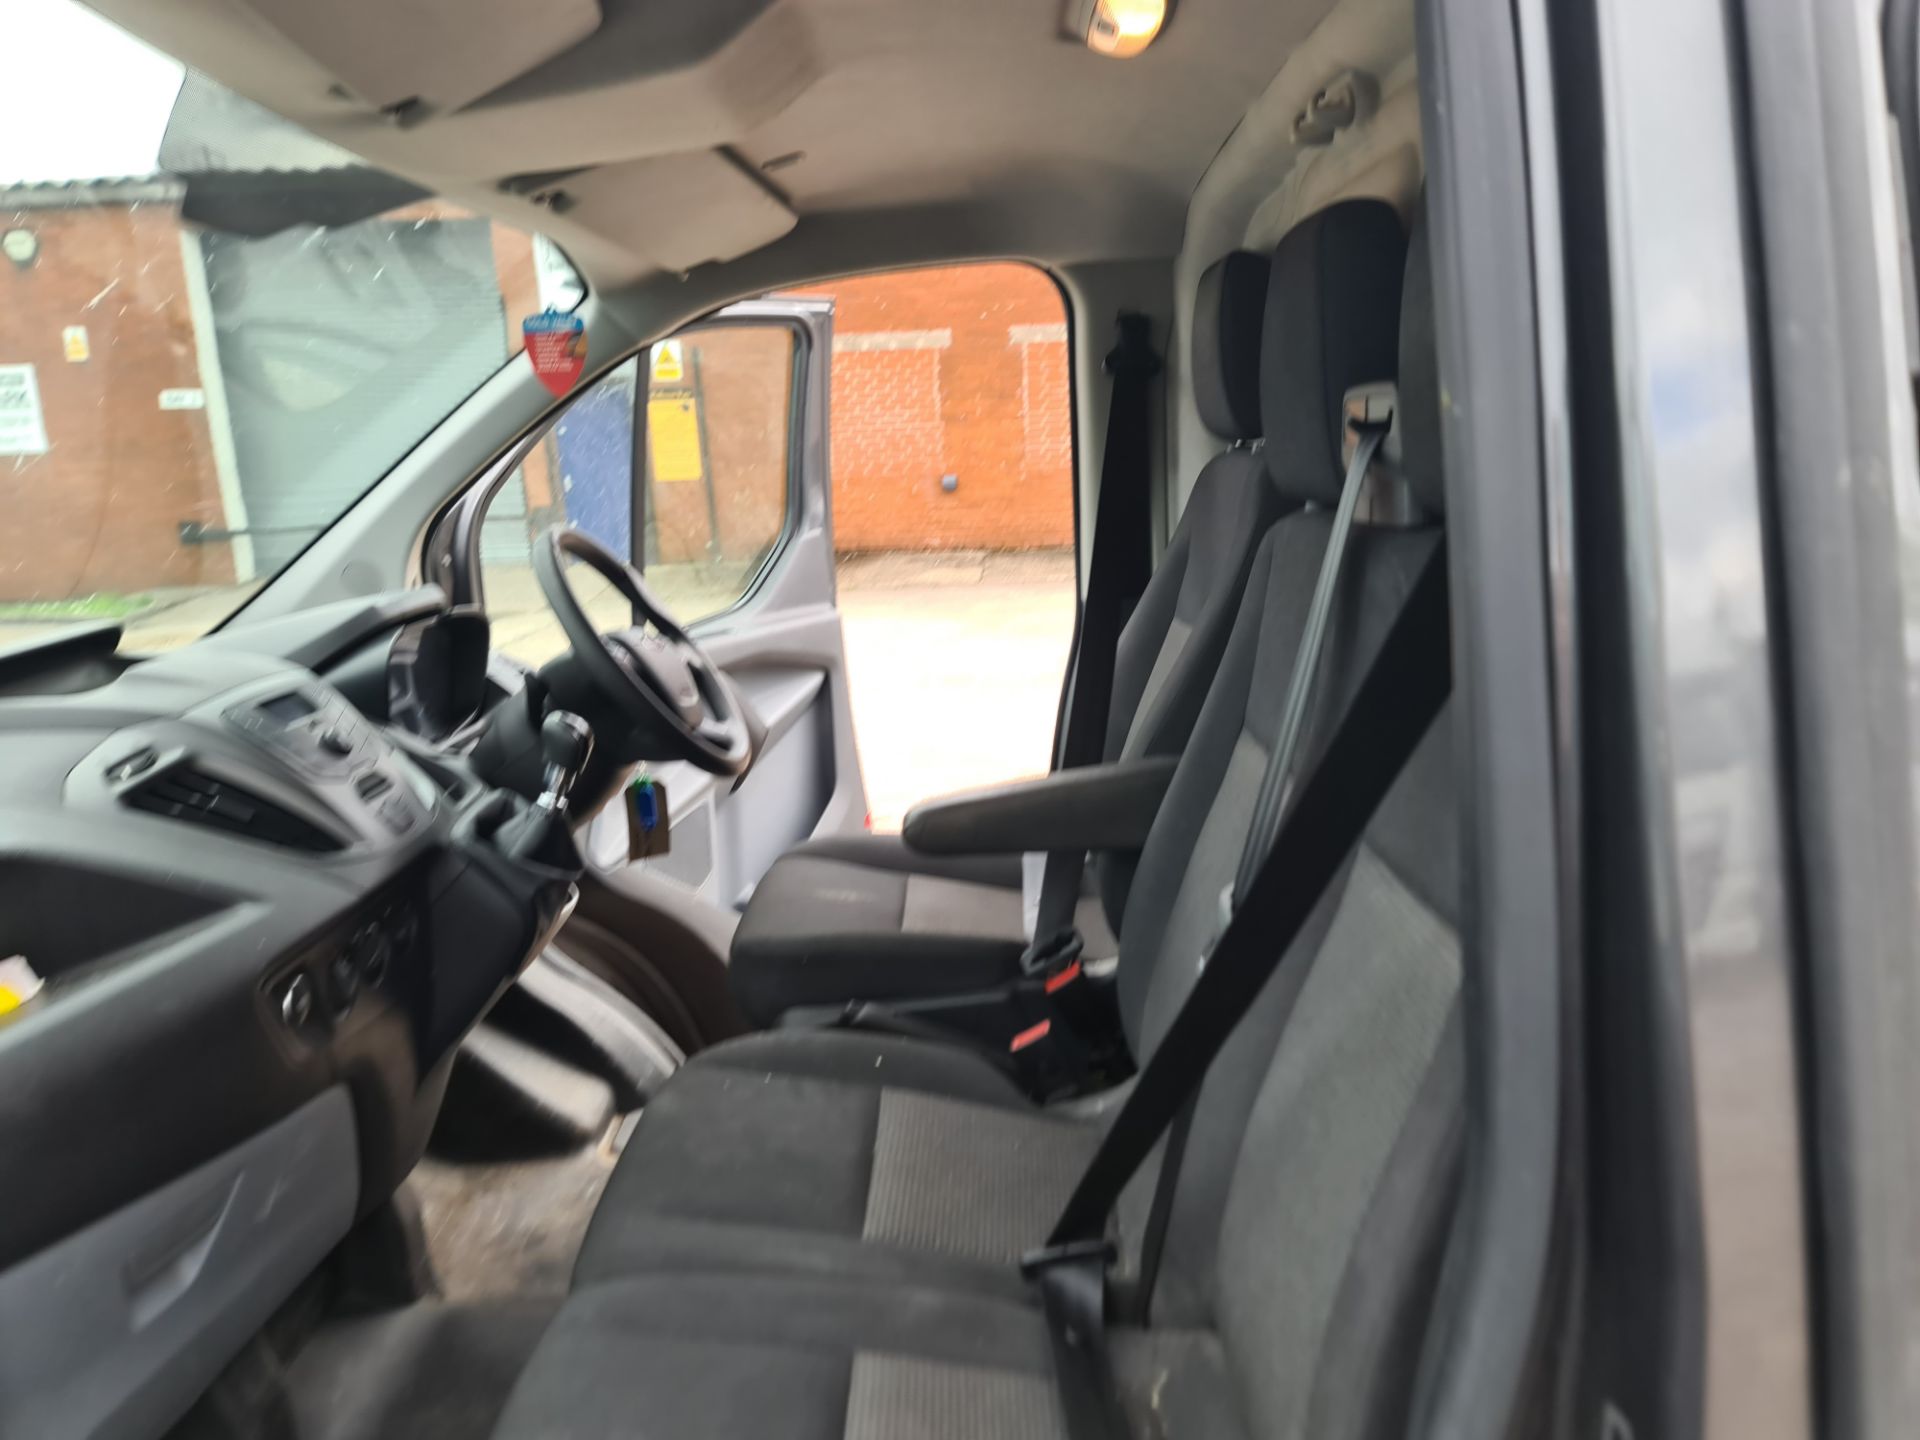 2018 Ford Transit Custom 270 panel van - Image 58 of 74